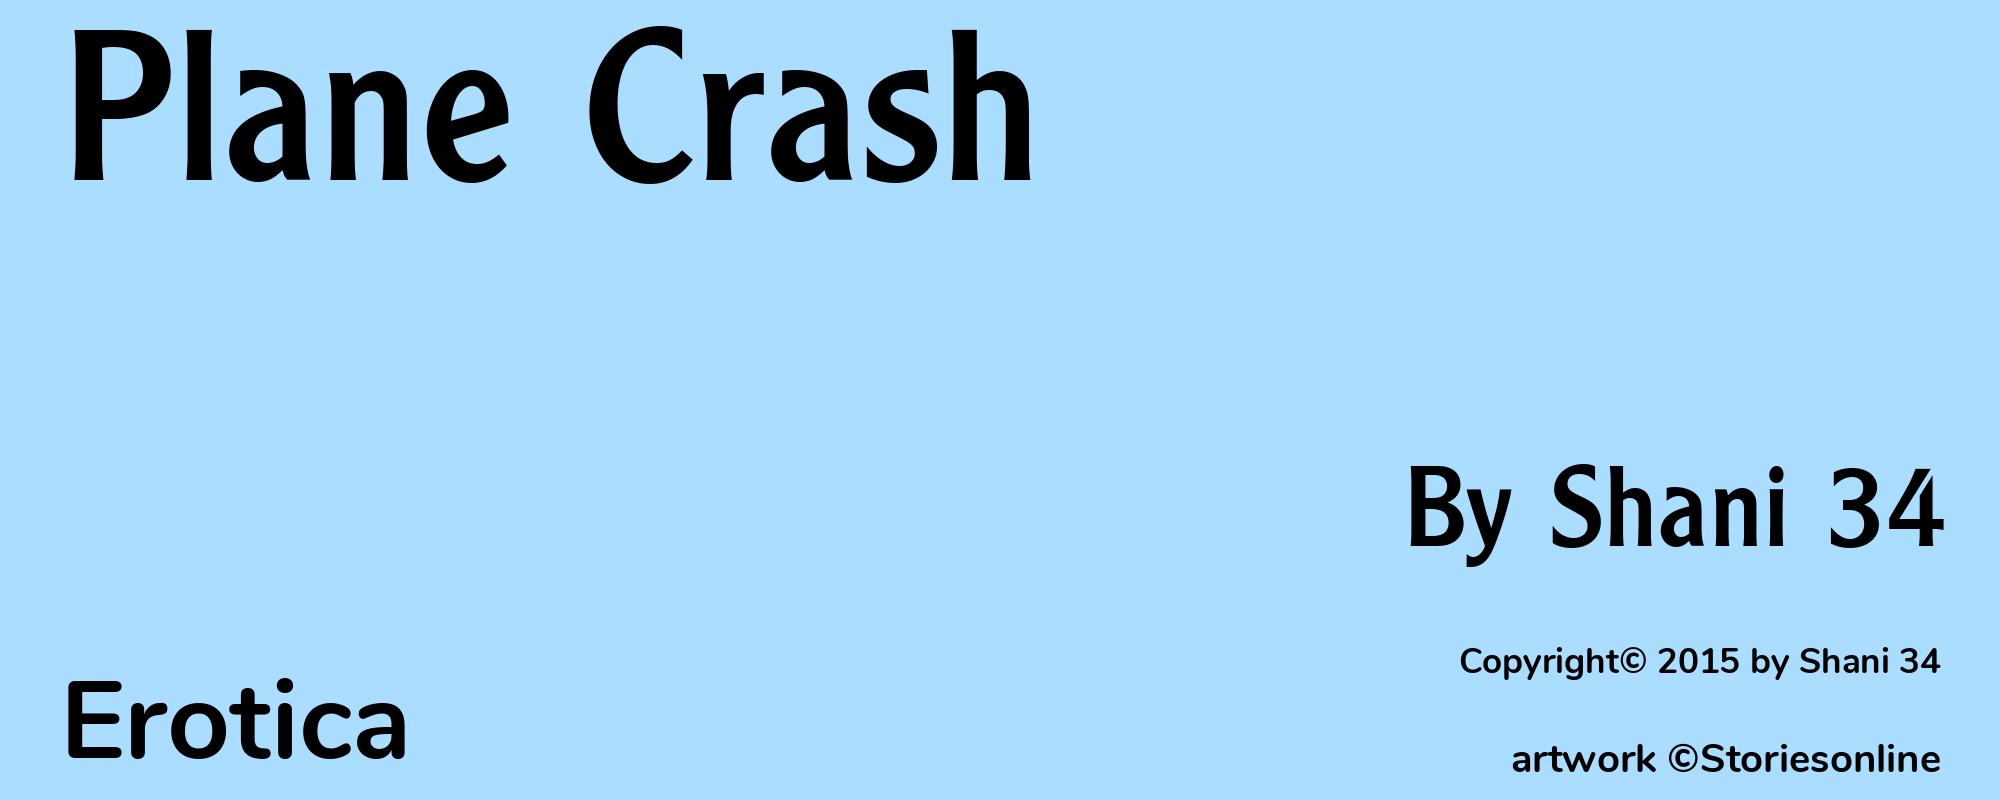 Plane Crash - Cover